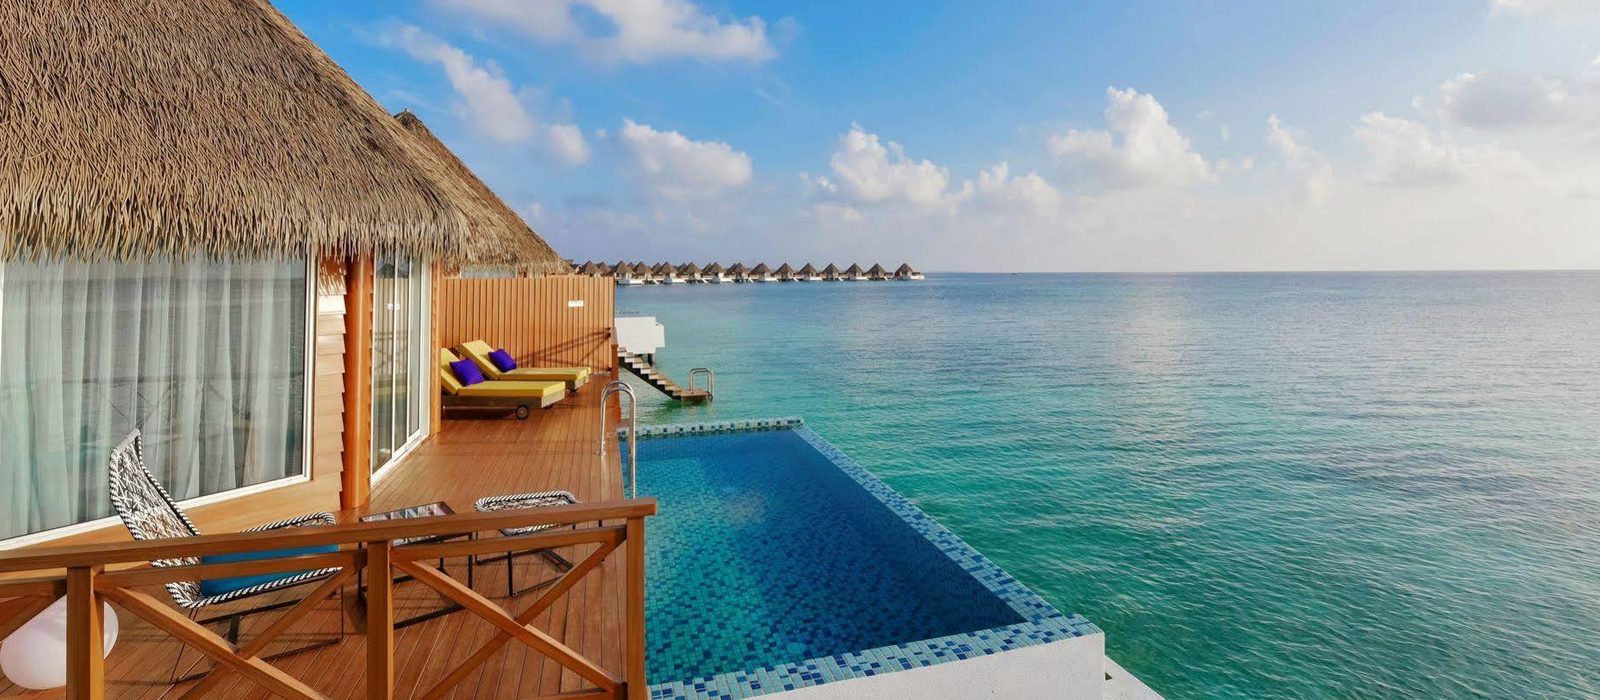 Luxury Maldives Holiday Packages Mercure Maldives Kooddoo Resort Header